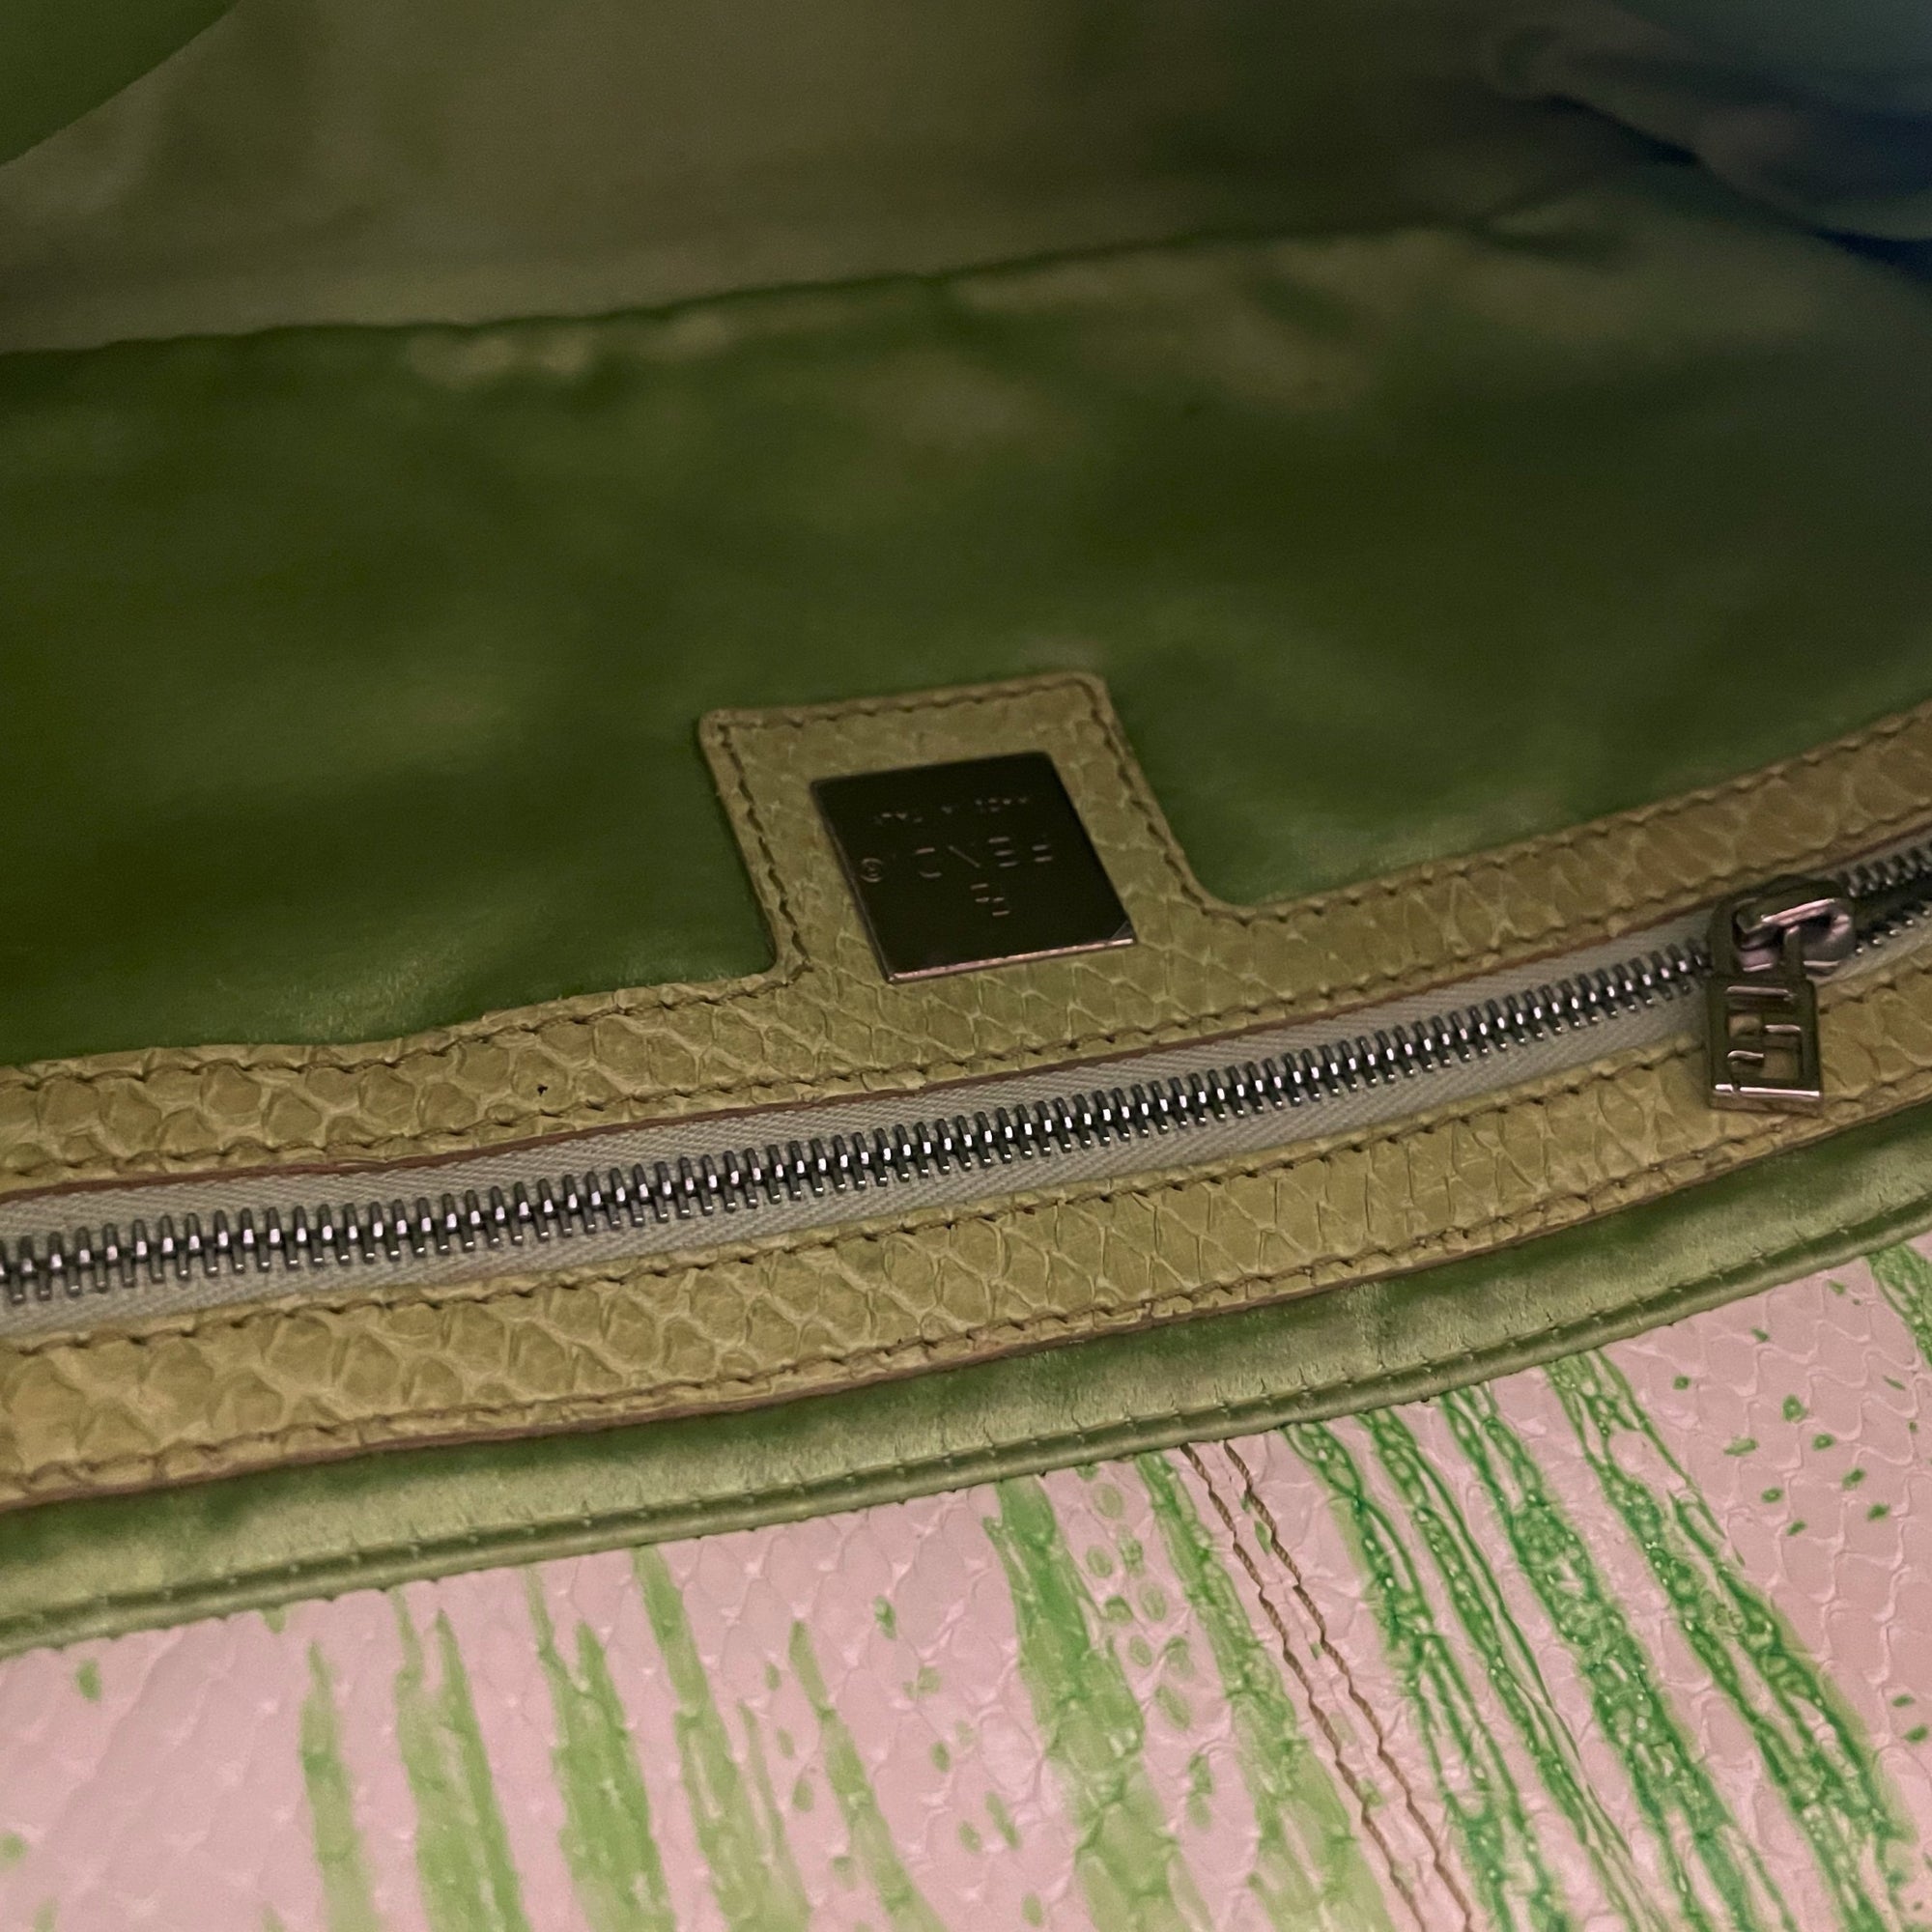 Fendi Lime Green Python Baguette Bag - Handbags